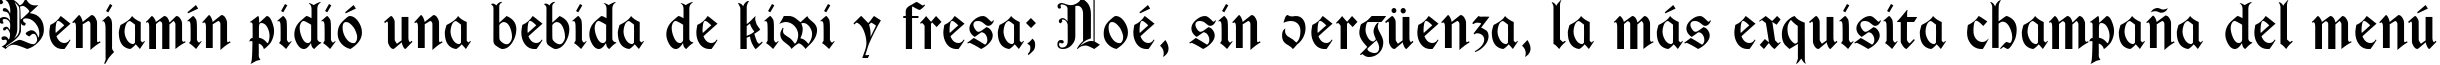 Пример написания шрифтом Cimbrian текста на испанском